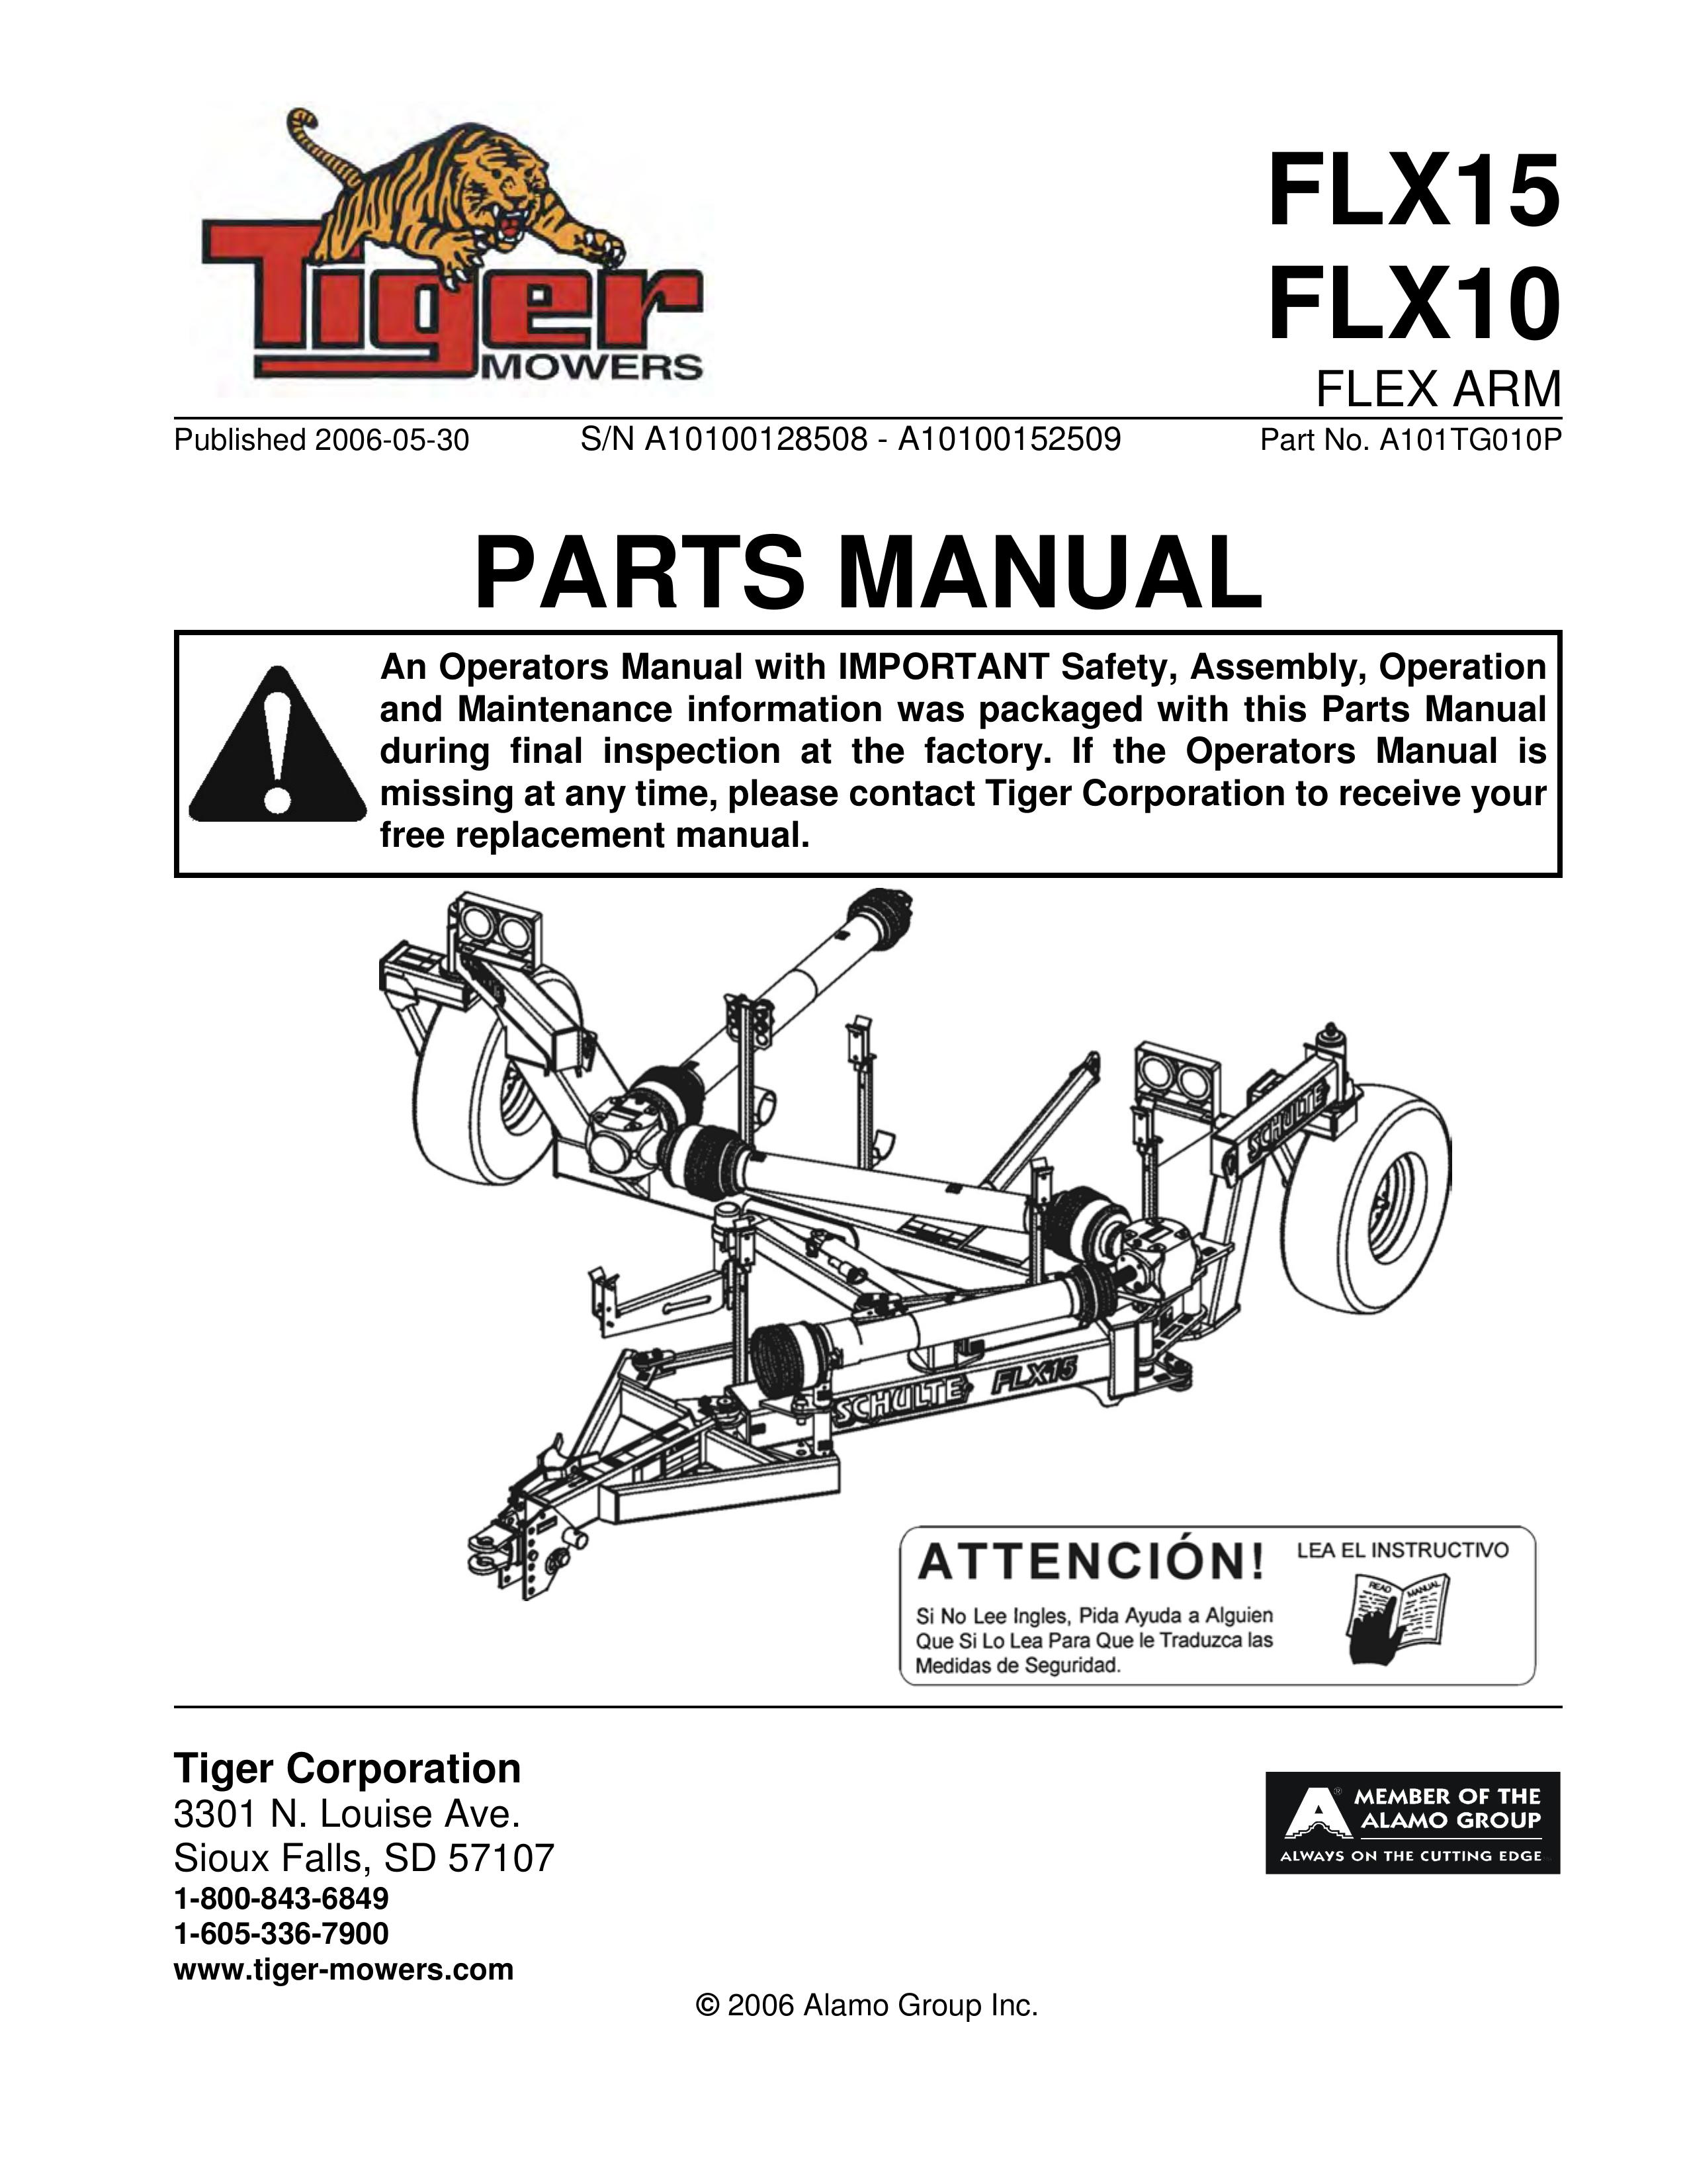 Tiger Mowers FLX15 Lawn Mower User Manual